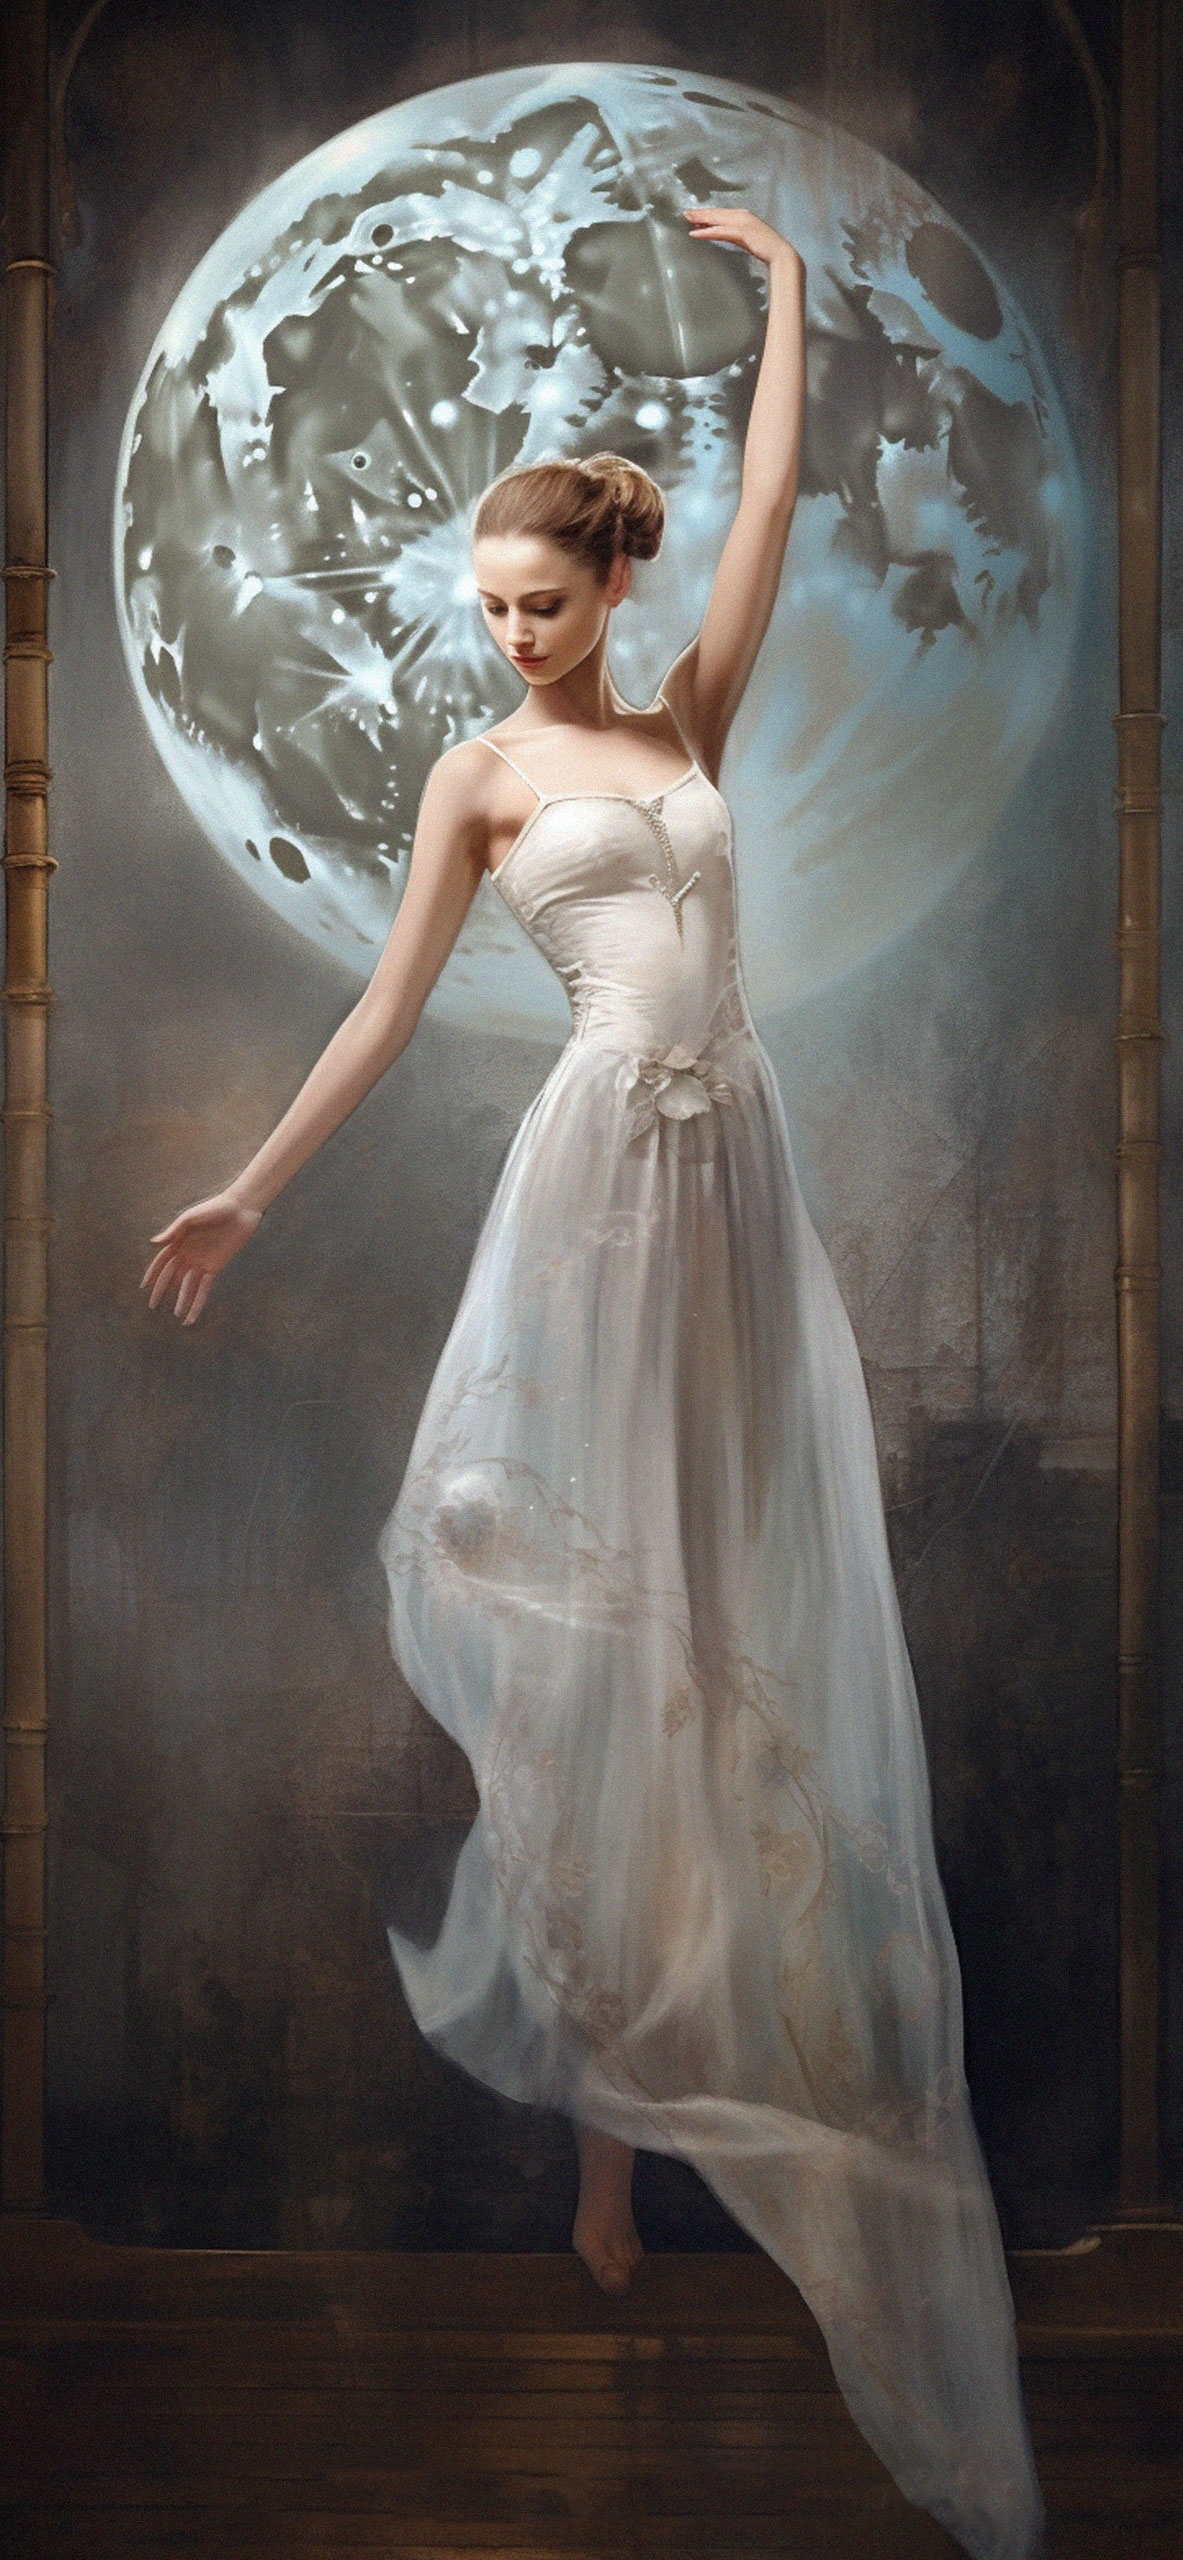 The delicate portrayal of ballerina wallpaper The elegant ball